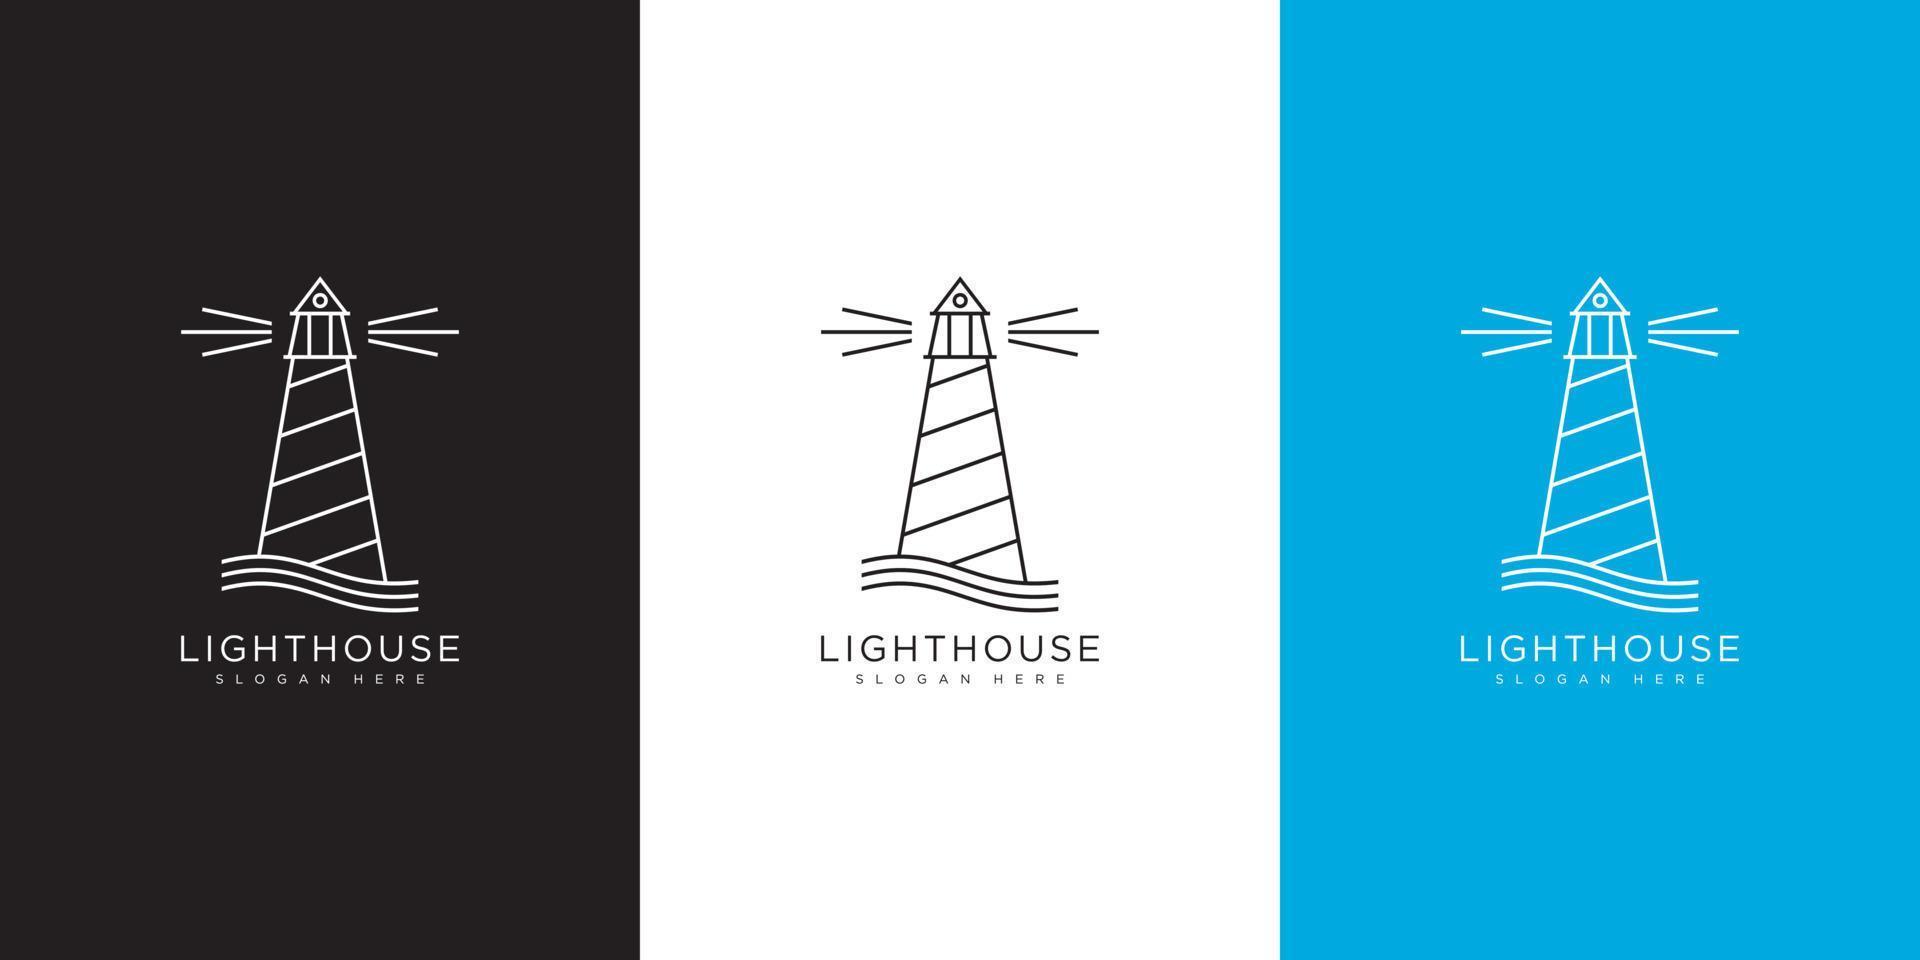 Leuchtturm-Logo-Design-Vektor-Vorlage vektor